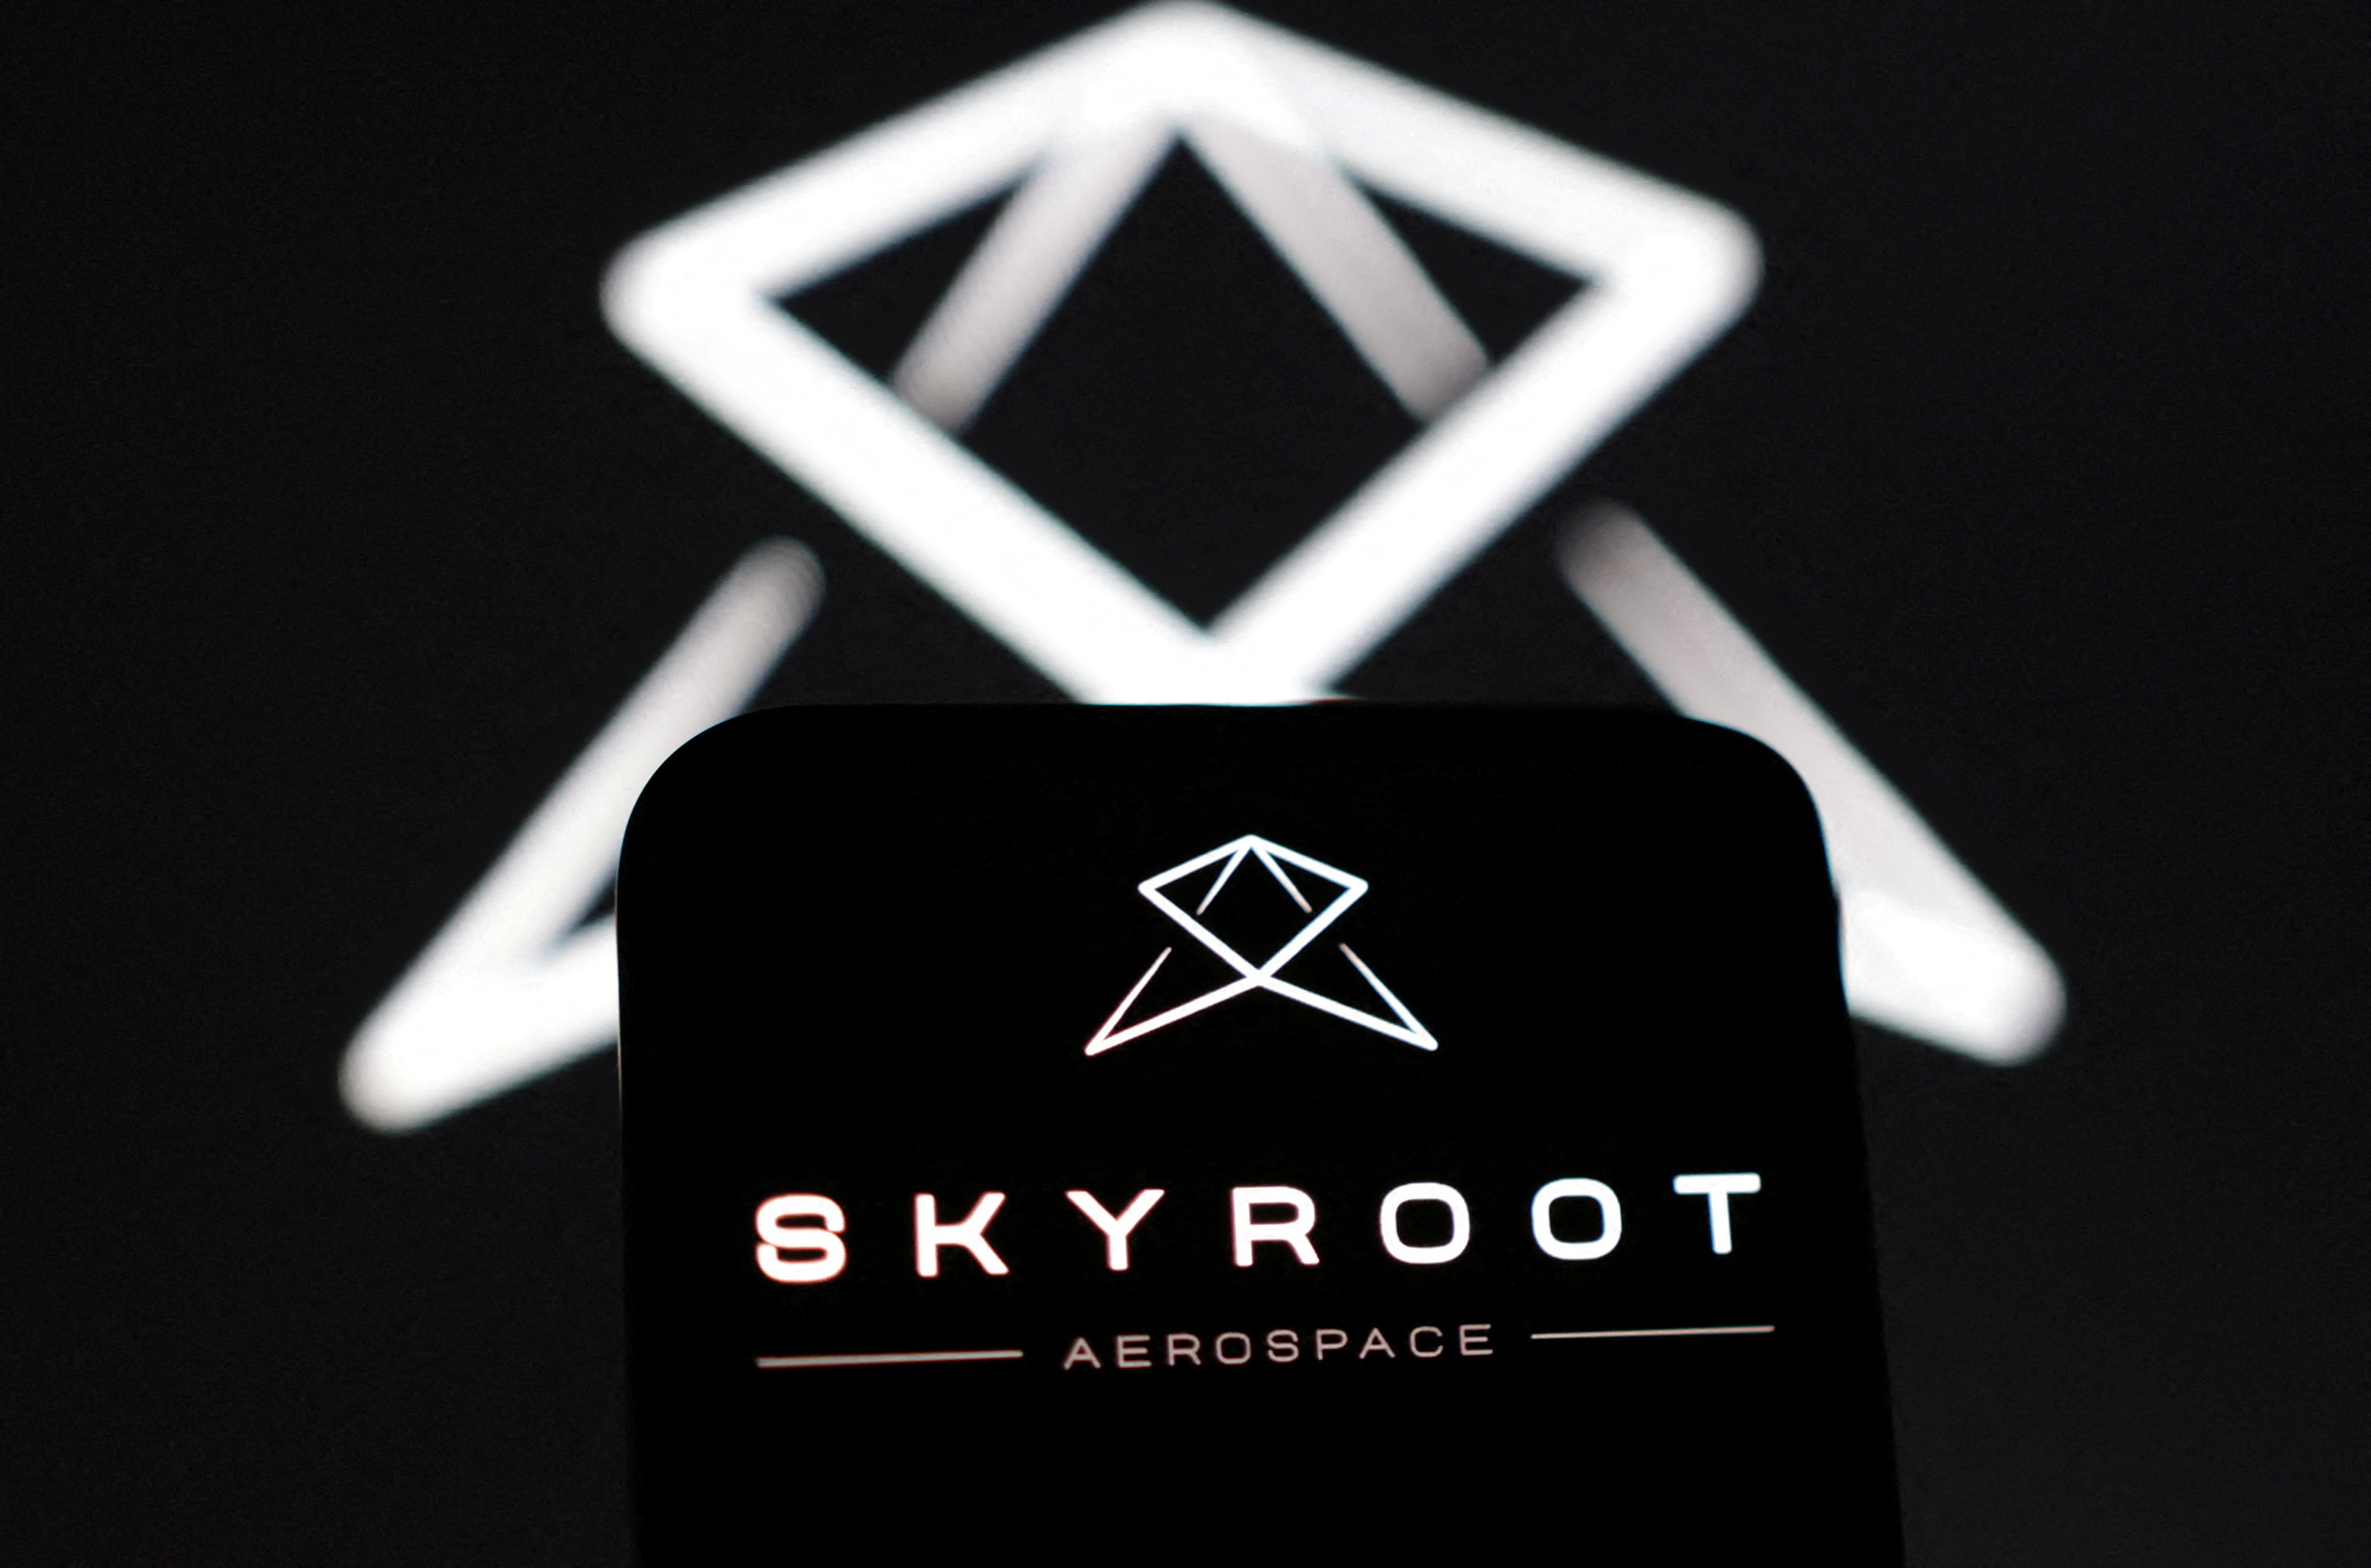 Illustration shows Skyroot Aerospace logo